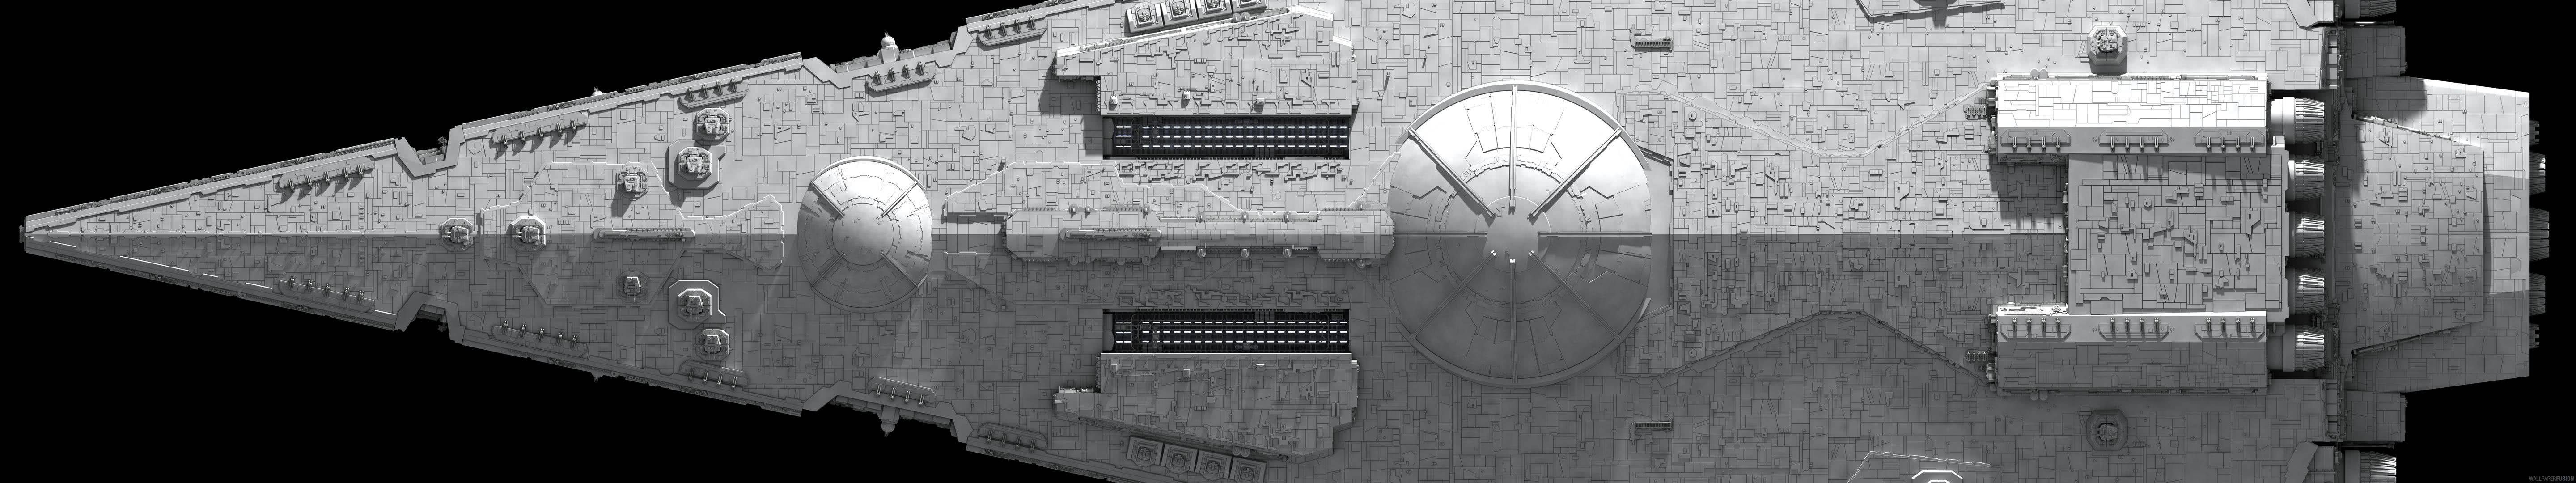 Star Wars Triple Monitor Wallpapers